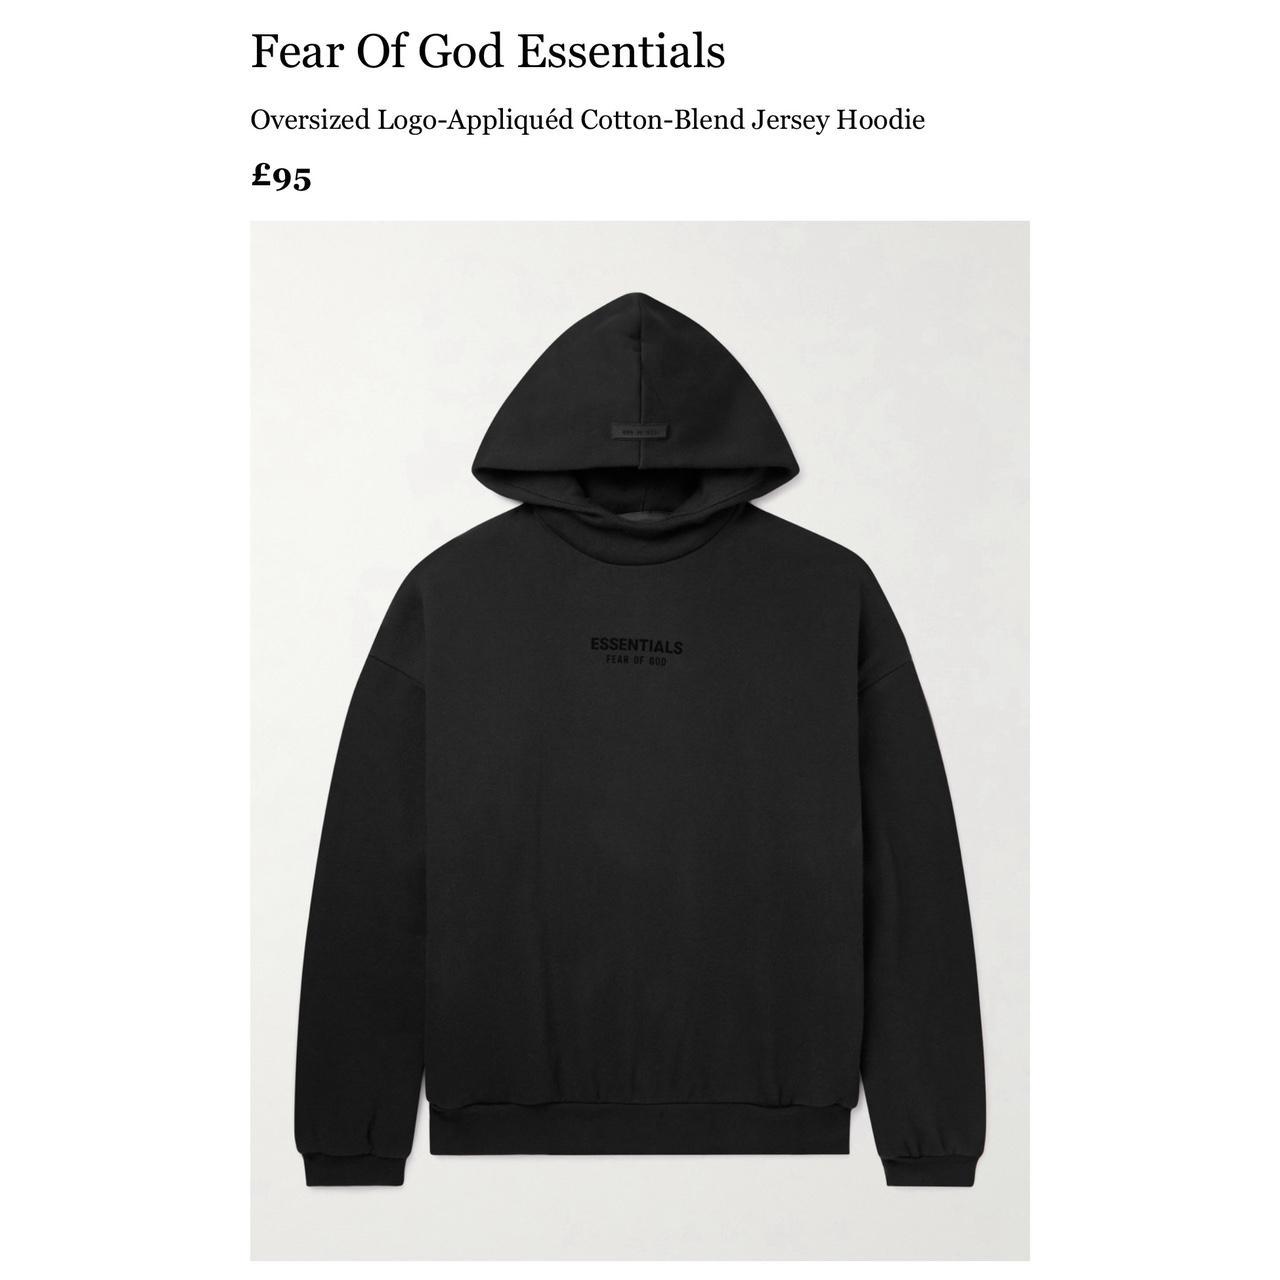 FEAR OF GOD ESSENTIALS Oversized Logo-Appliquéd Cotton-Blend